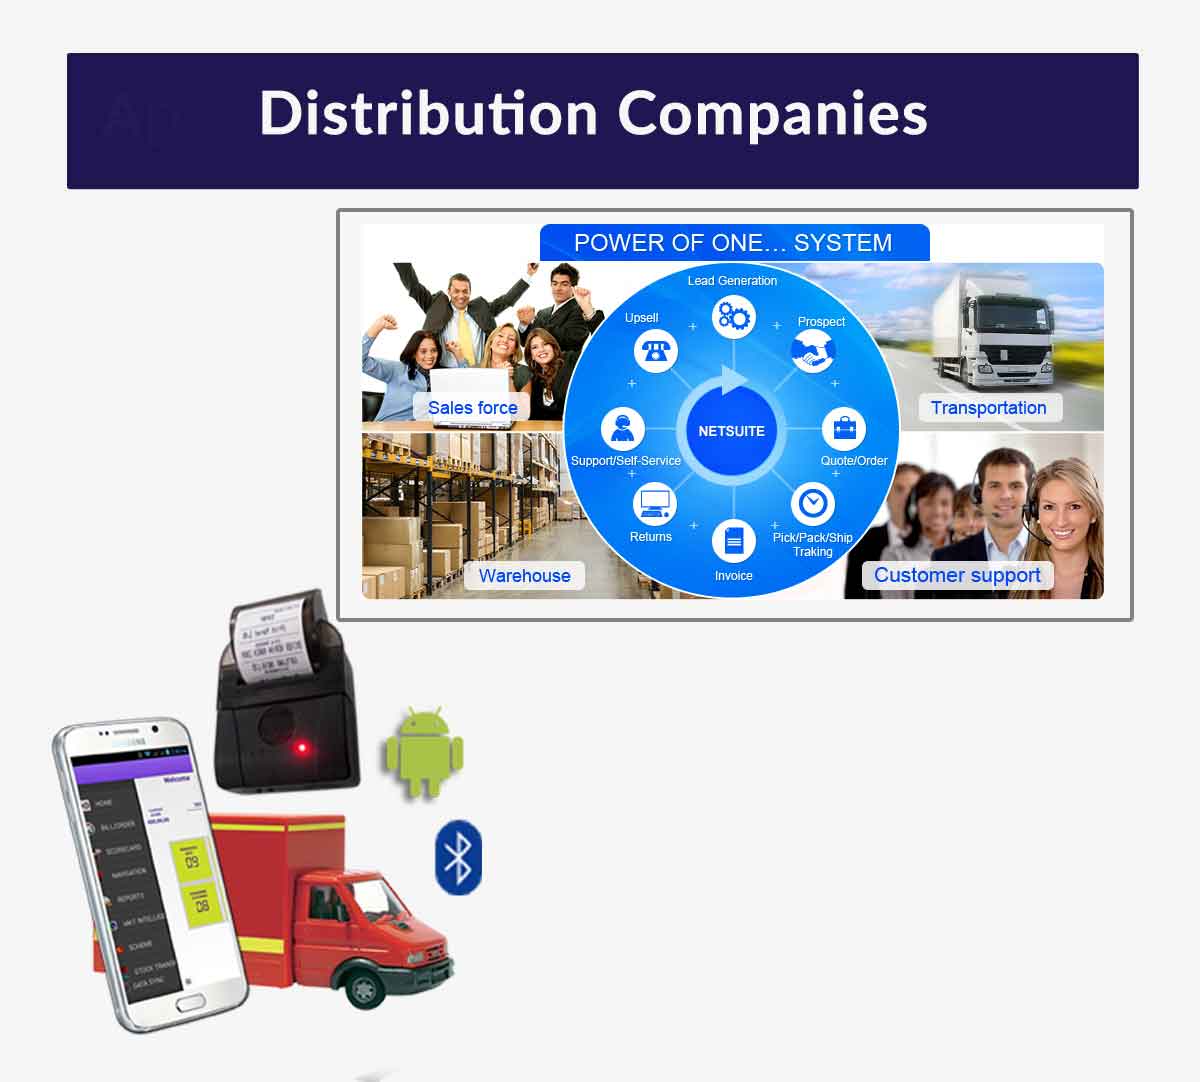 Distribution Companies